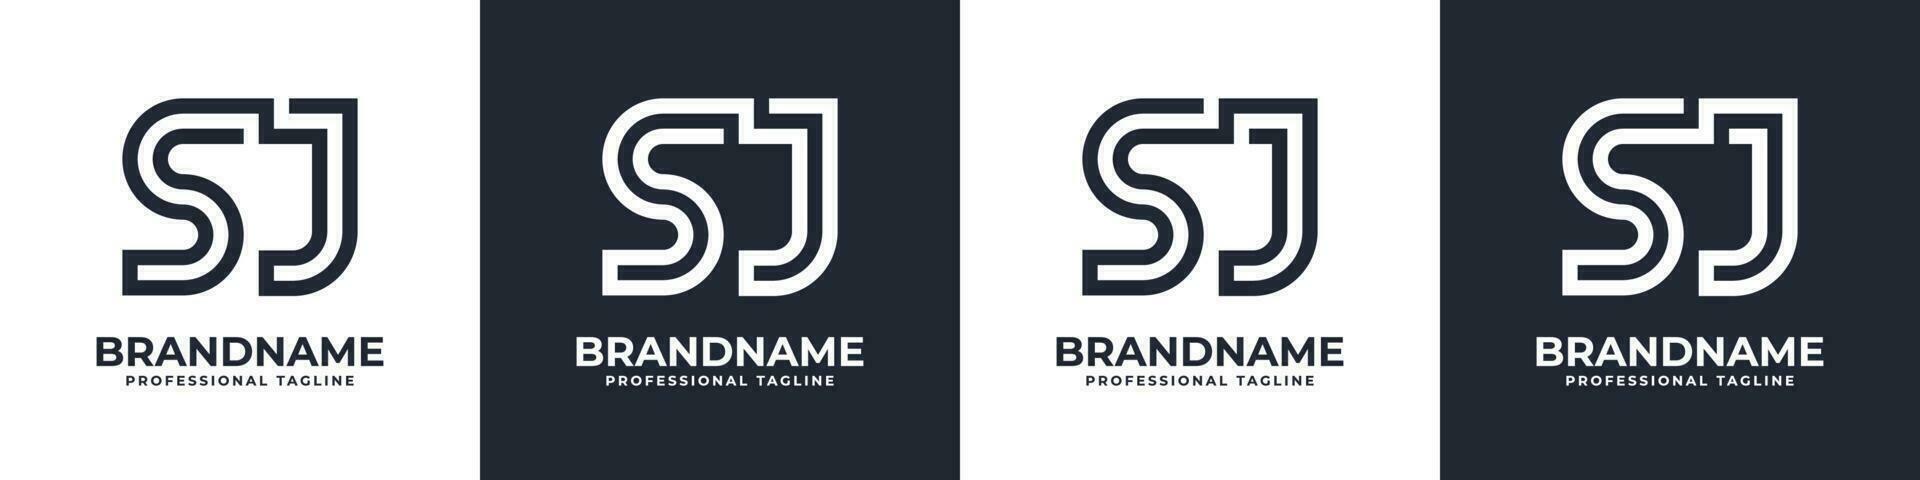 sencillo sj monograma logo, adecuado para ninguna negocio con sj o js inicial. vector